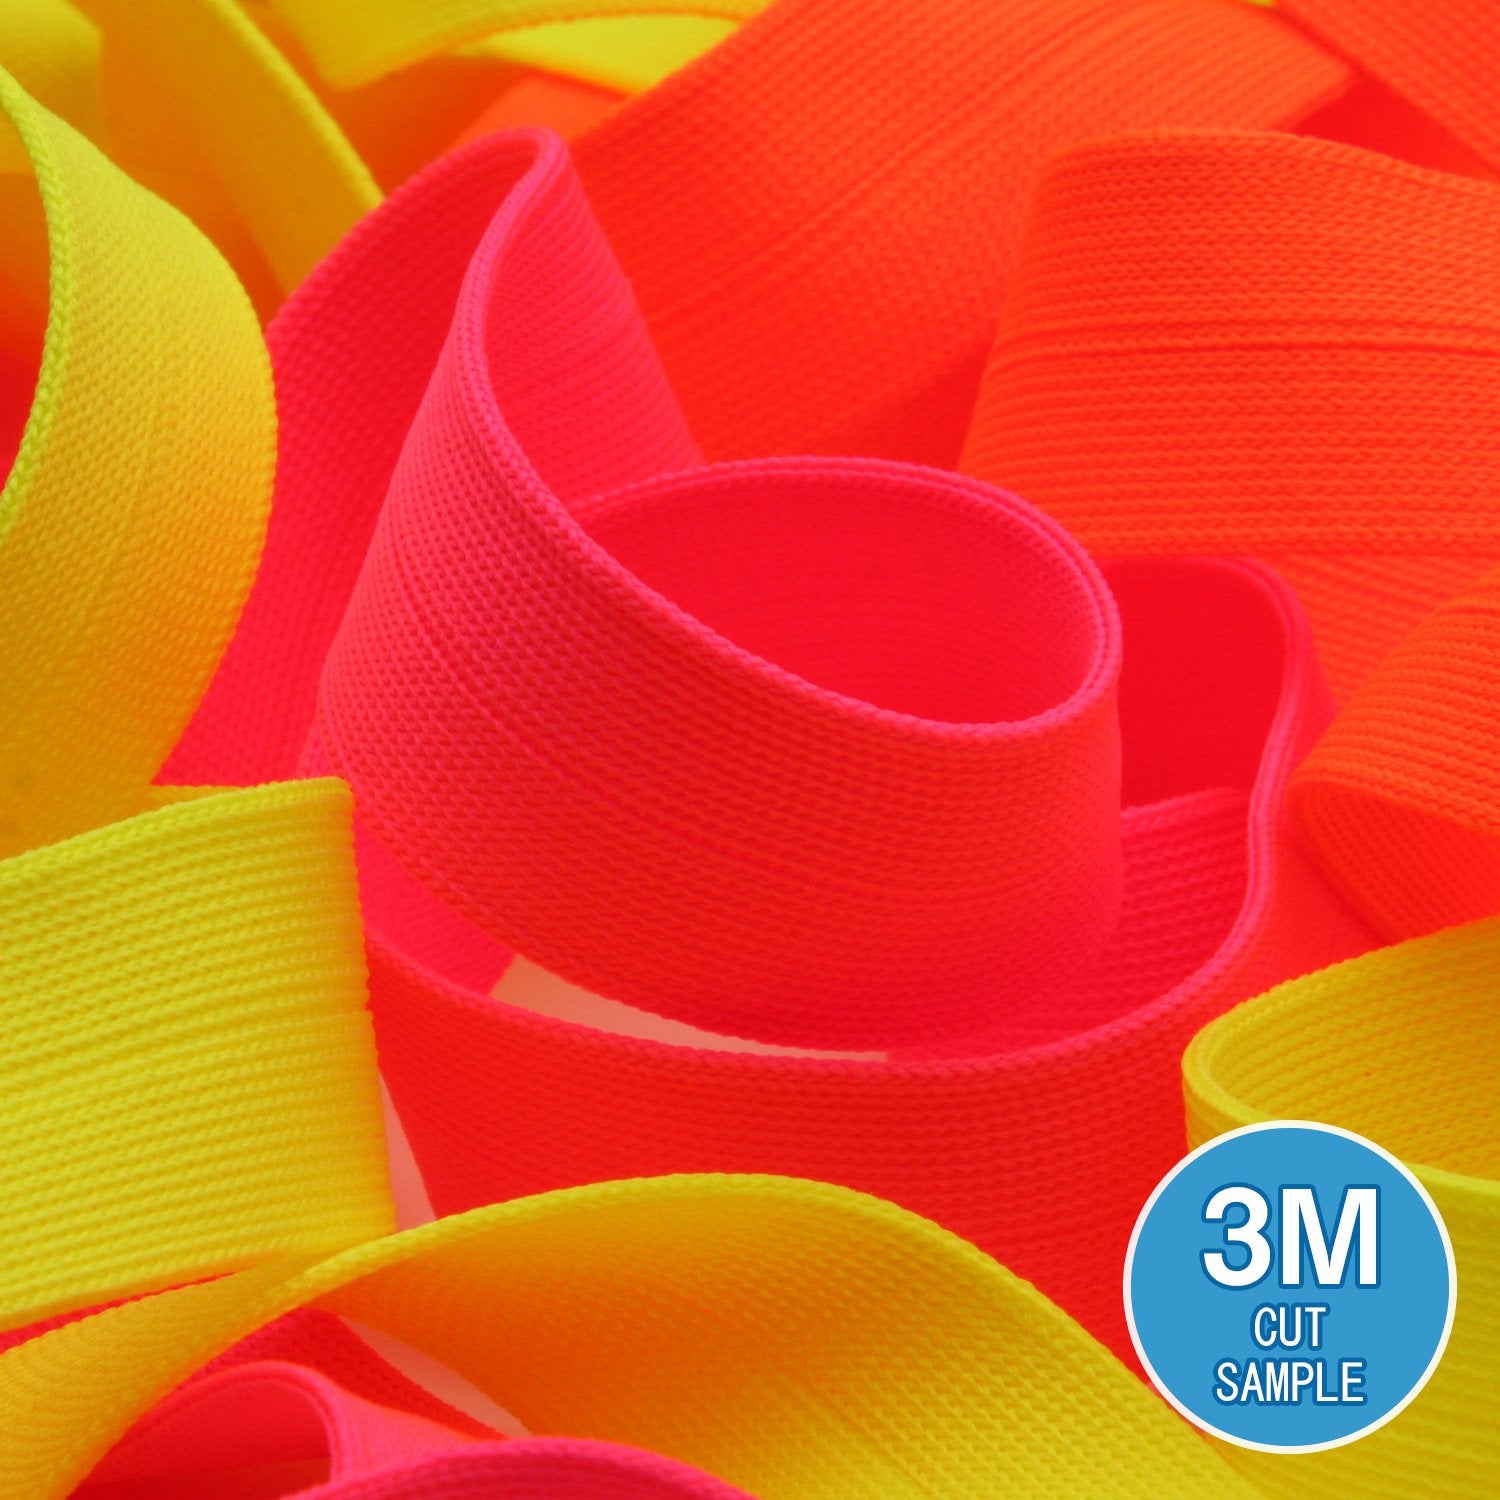 FUJIYAMA RIBBON [Sample] Polyester Thin Knit Binder Tape (FY-210FB) 9x9mm 3 Meters Cut